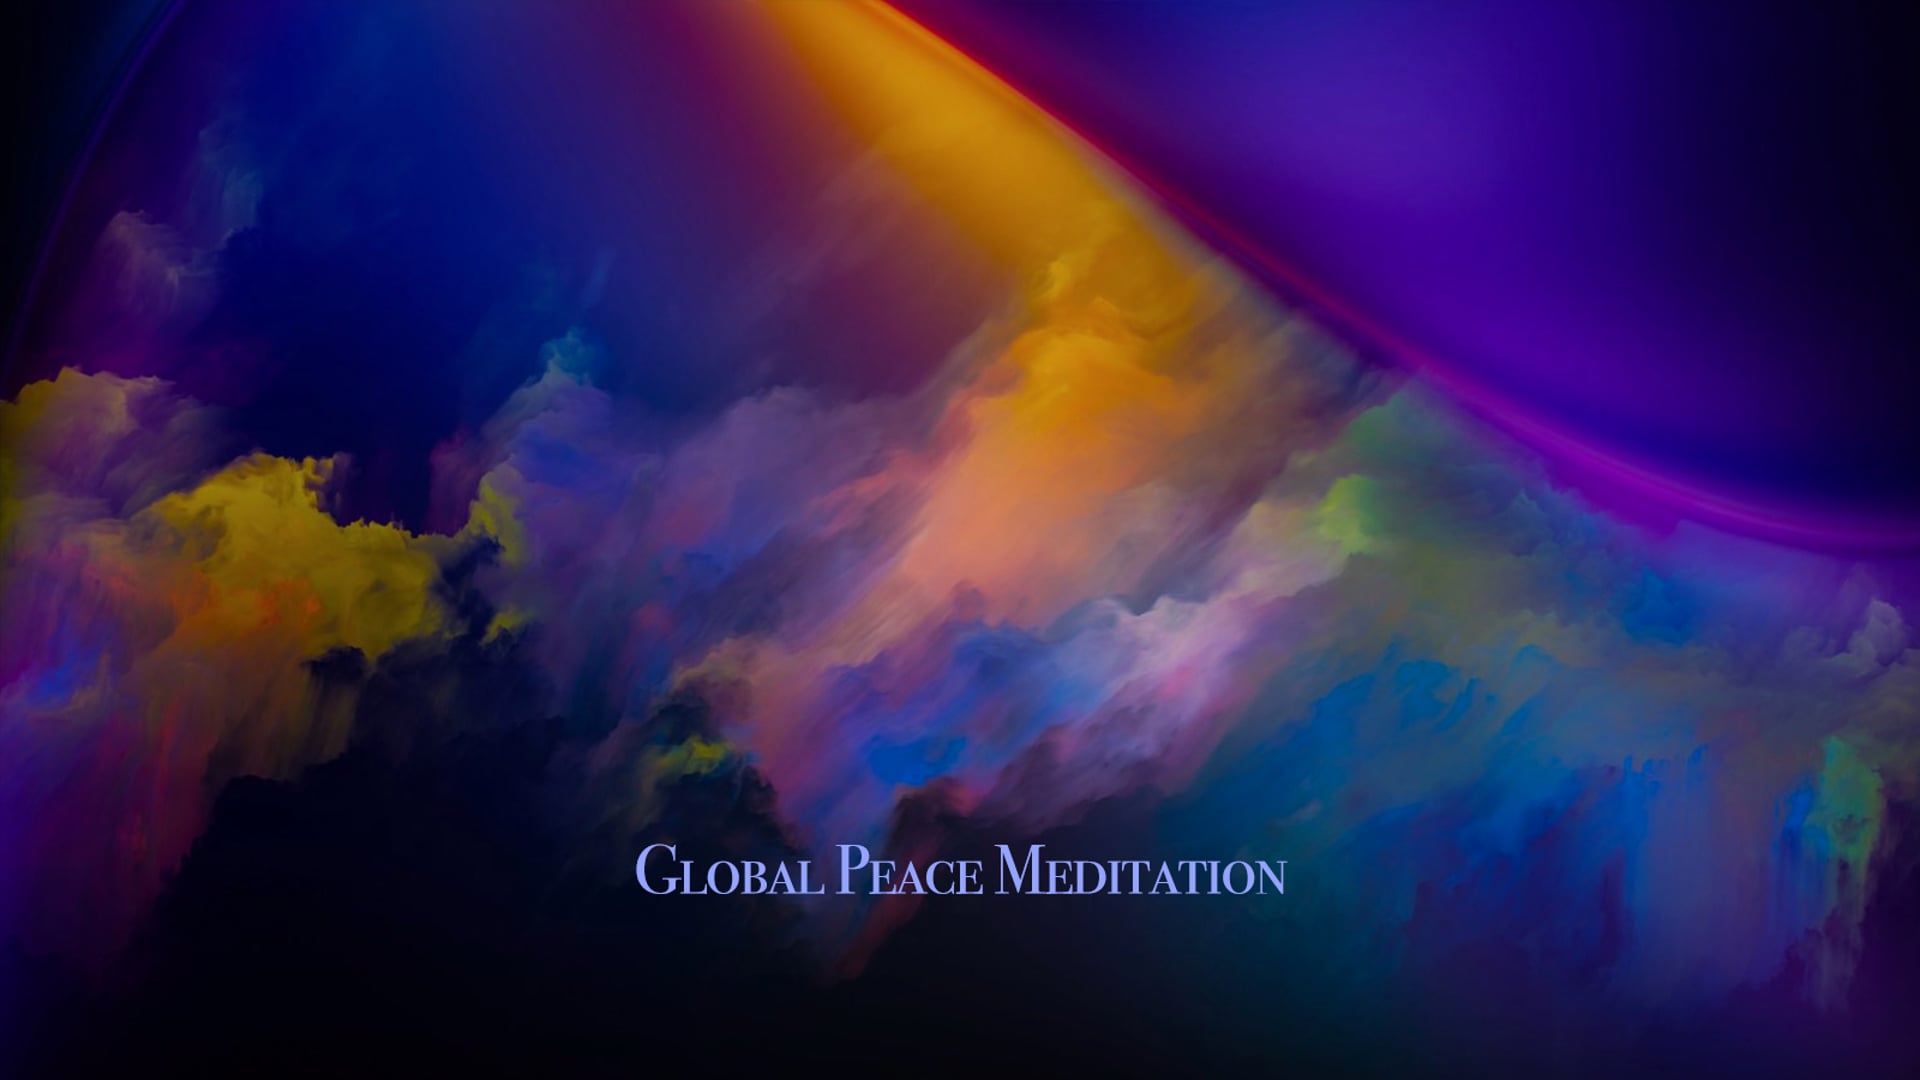 April 21 Healing global pain